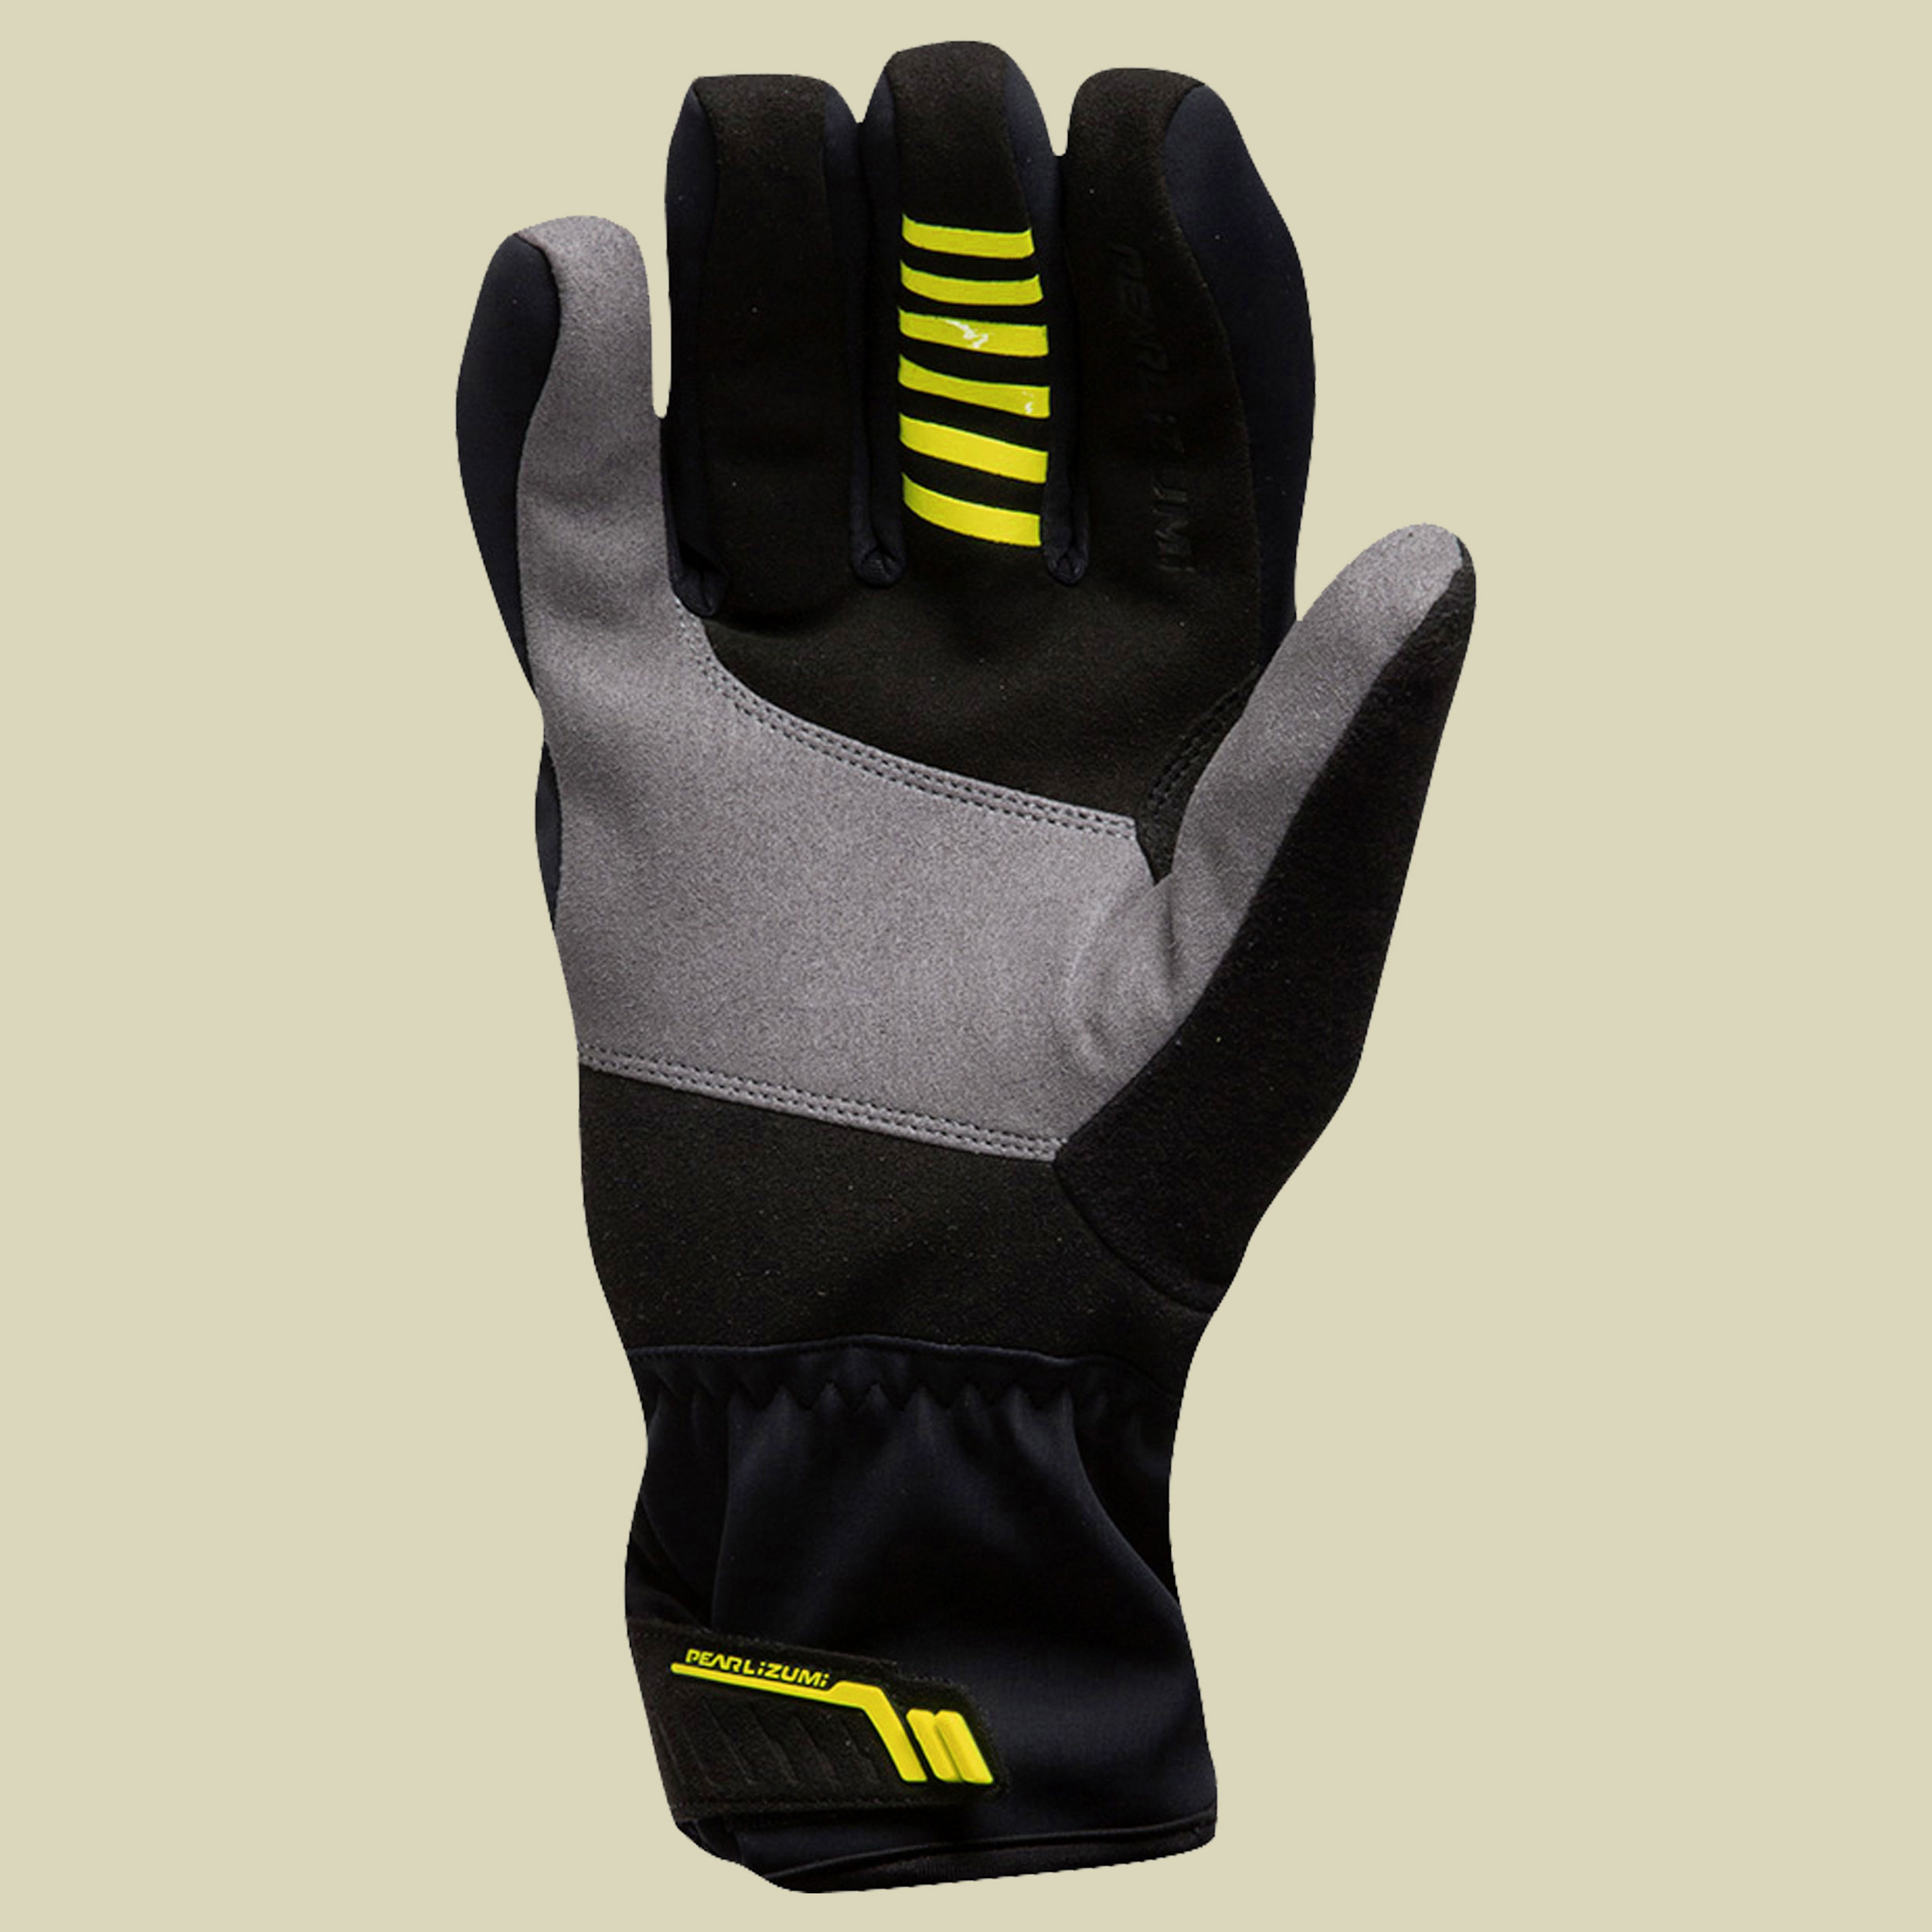 Pro AmFib Glove Größe XL Farbe screaming yellow